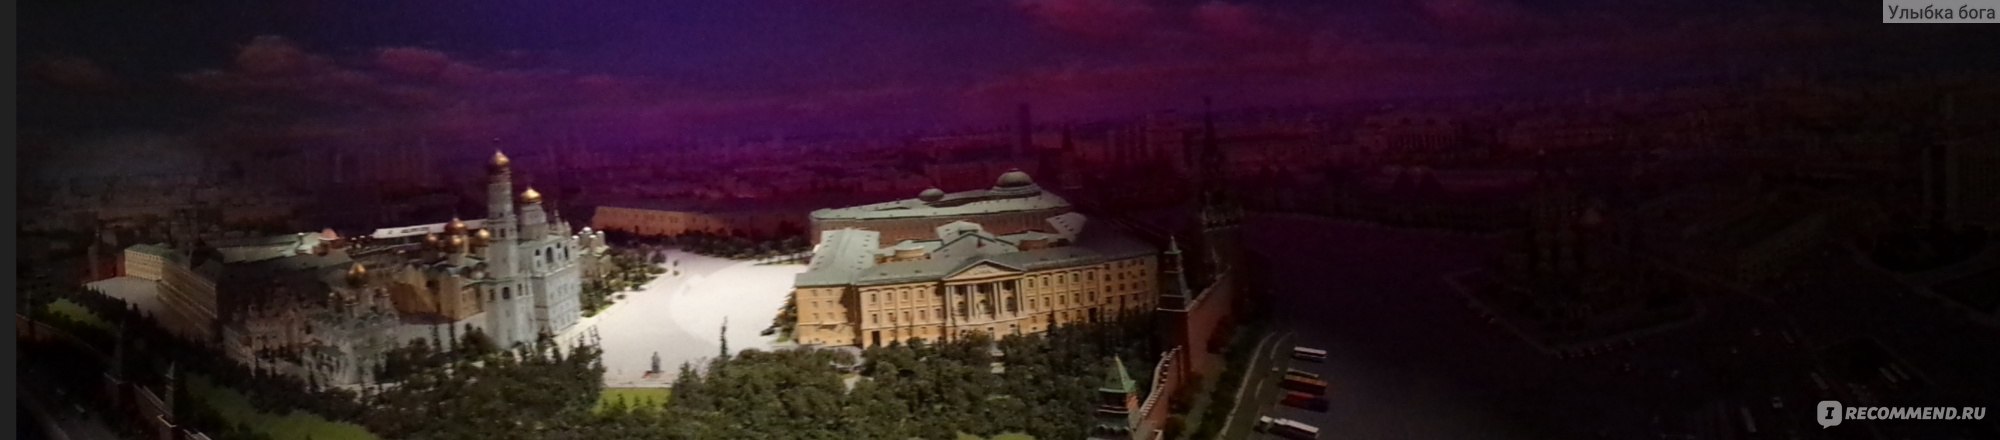 Город Москва (Россия), г/т "Украина" (Radisson), Панорама Москвы